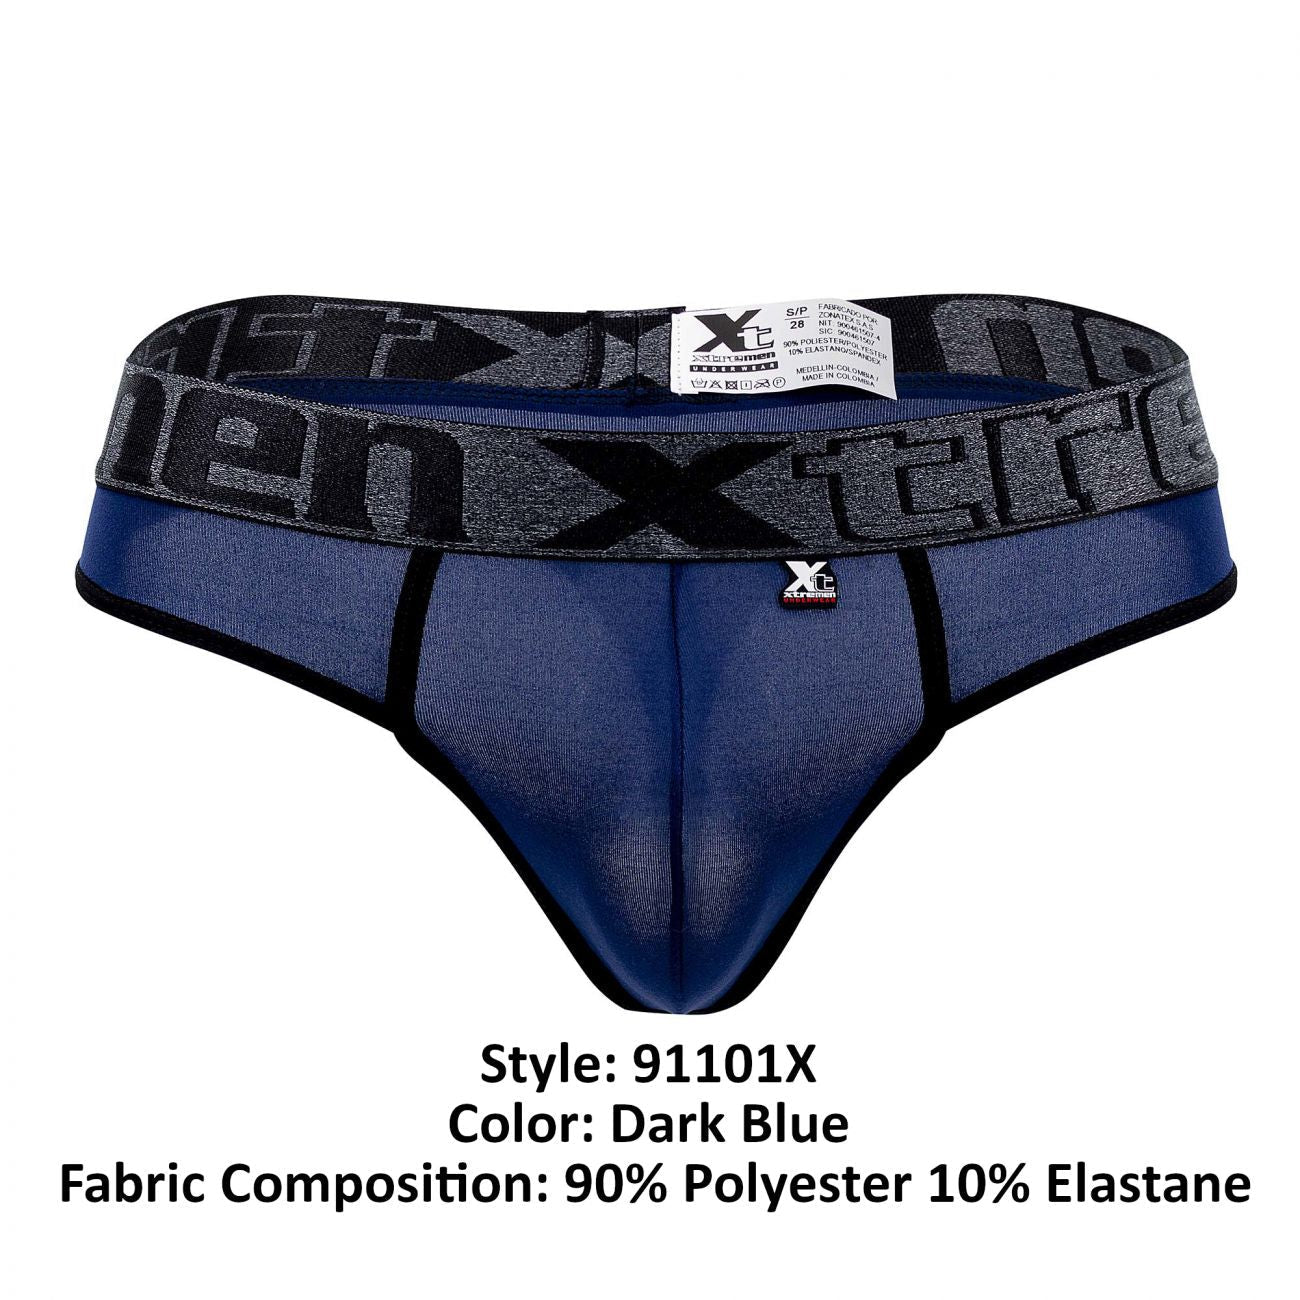 Xtremen 91101X Microfiber Thongs Dark Blue Plus Sizes